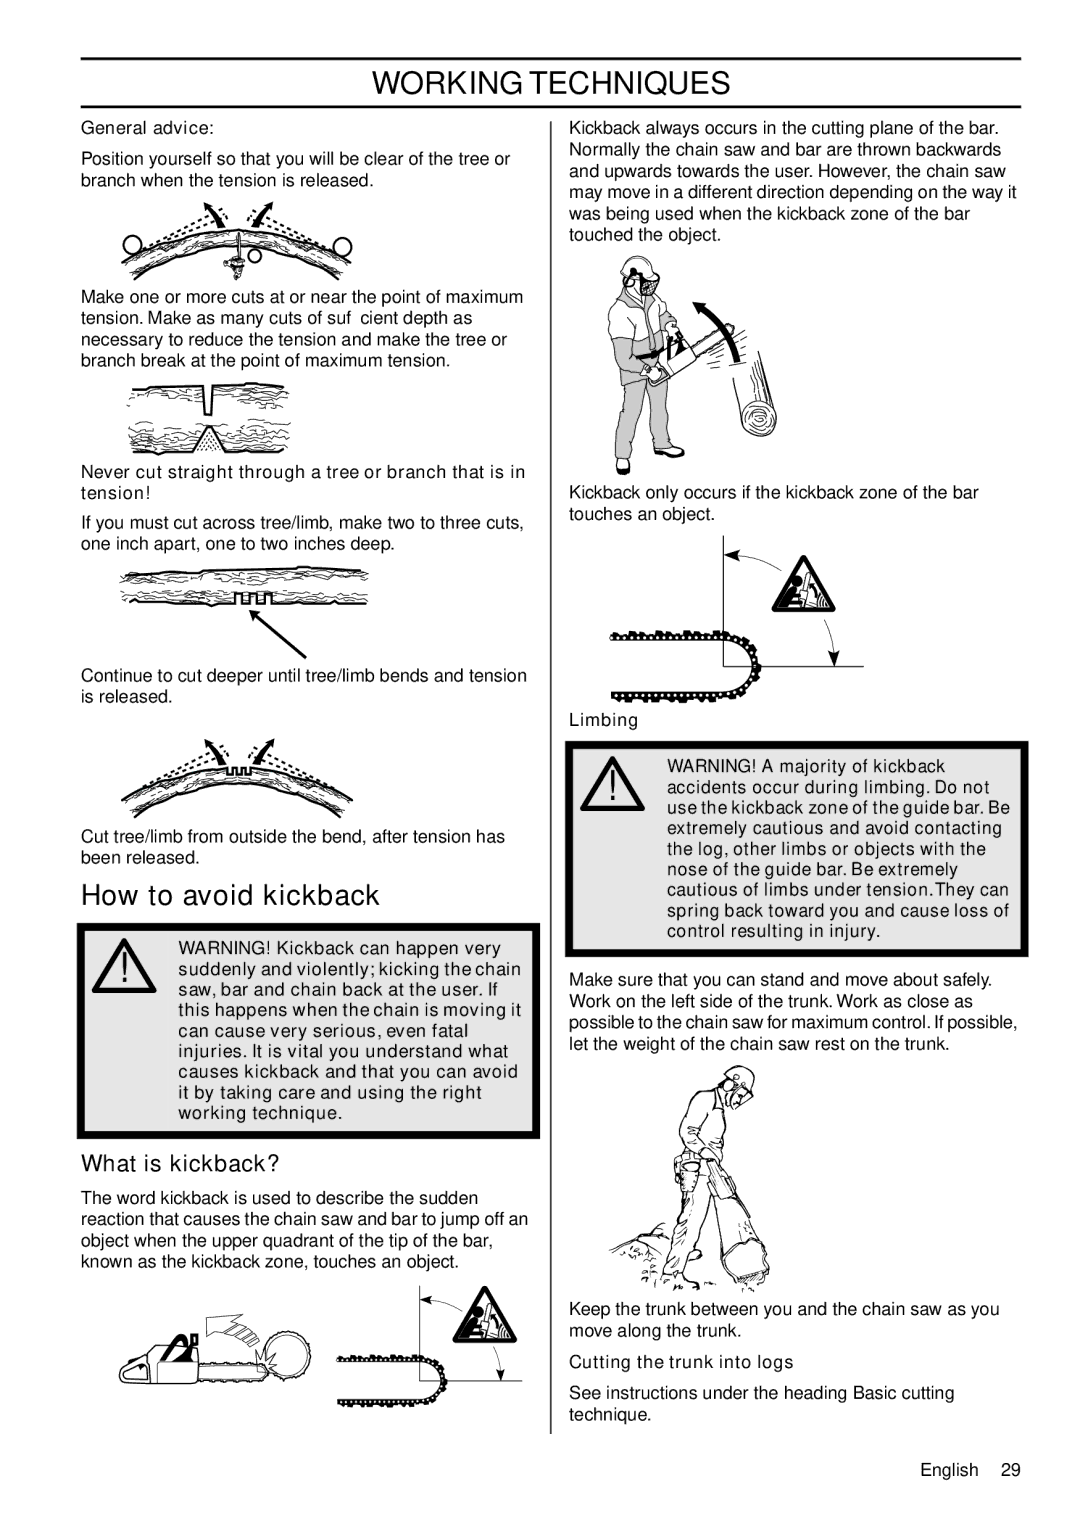 Husqvarna 1150901-95 manual How to avoid kickback, What is kickback?, General advice, Cutting the trunk into logs 